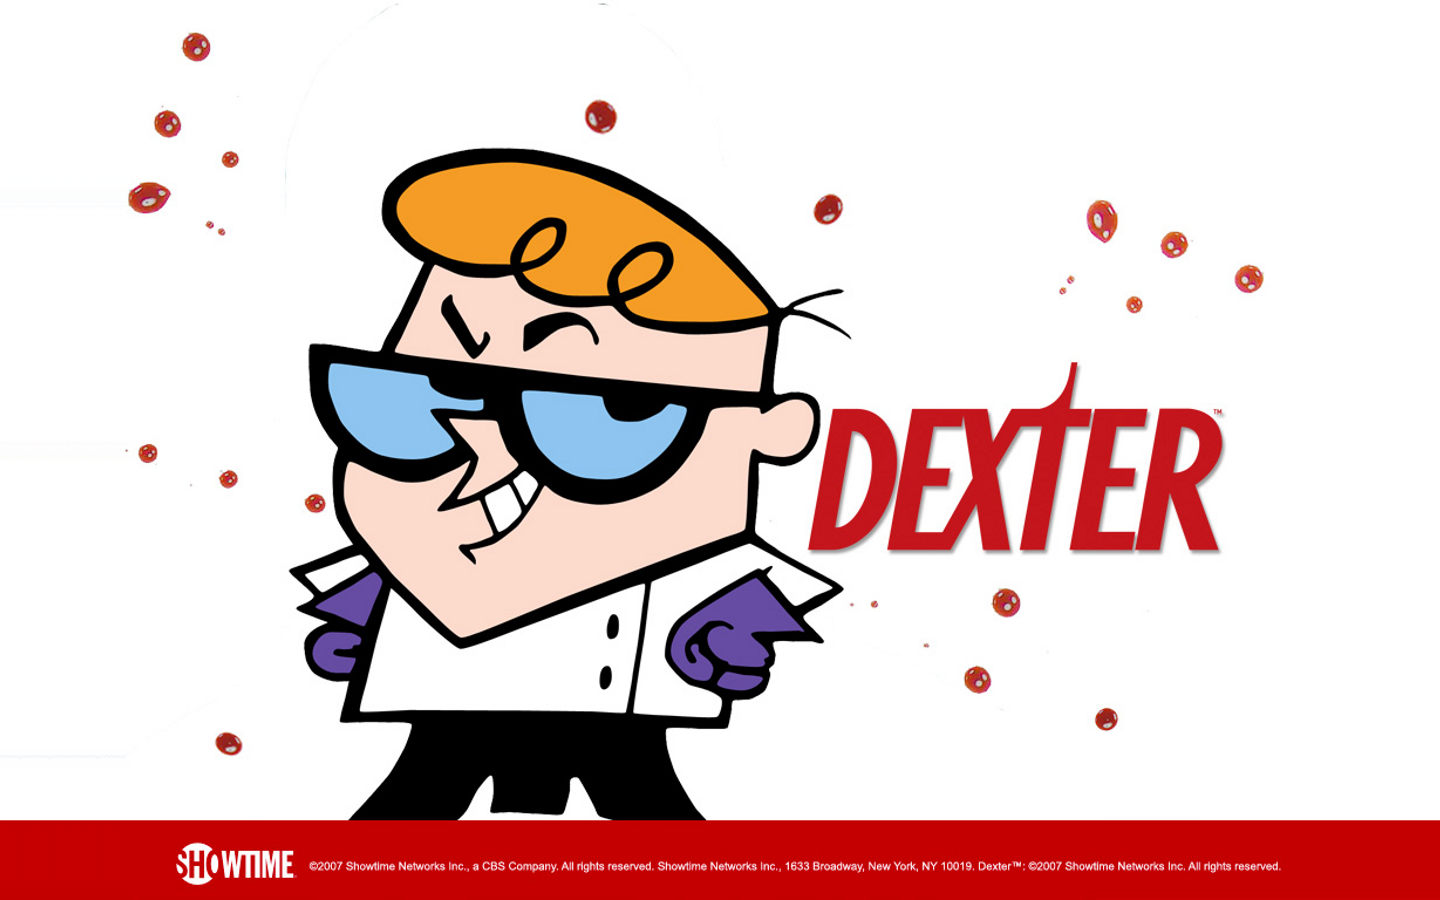 dexter dexters laboratory HD Wallpaper   General 380142 1440x900